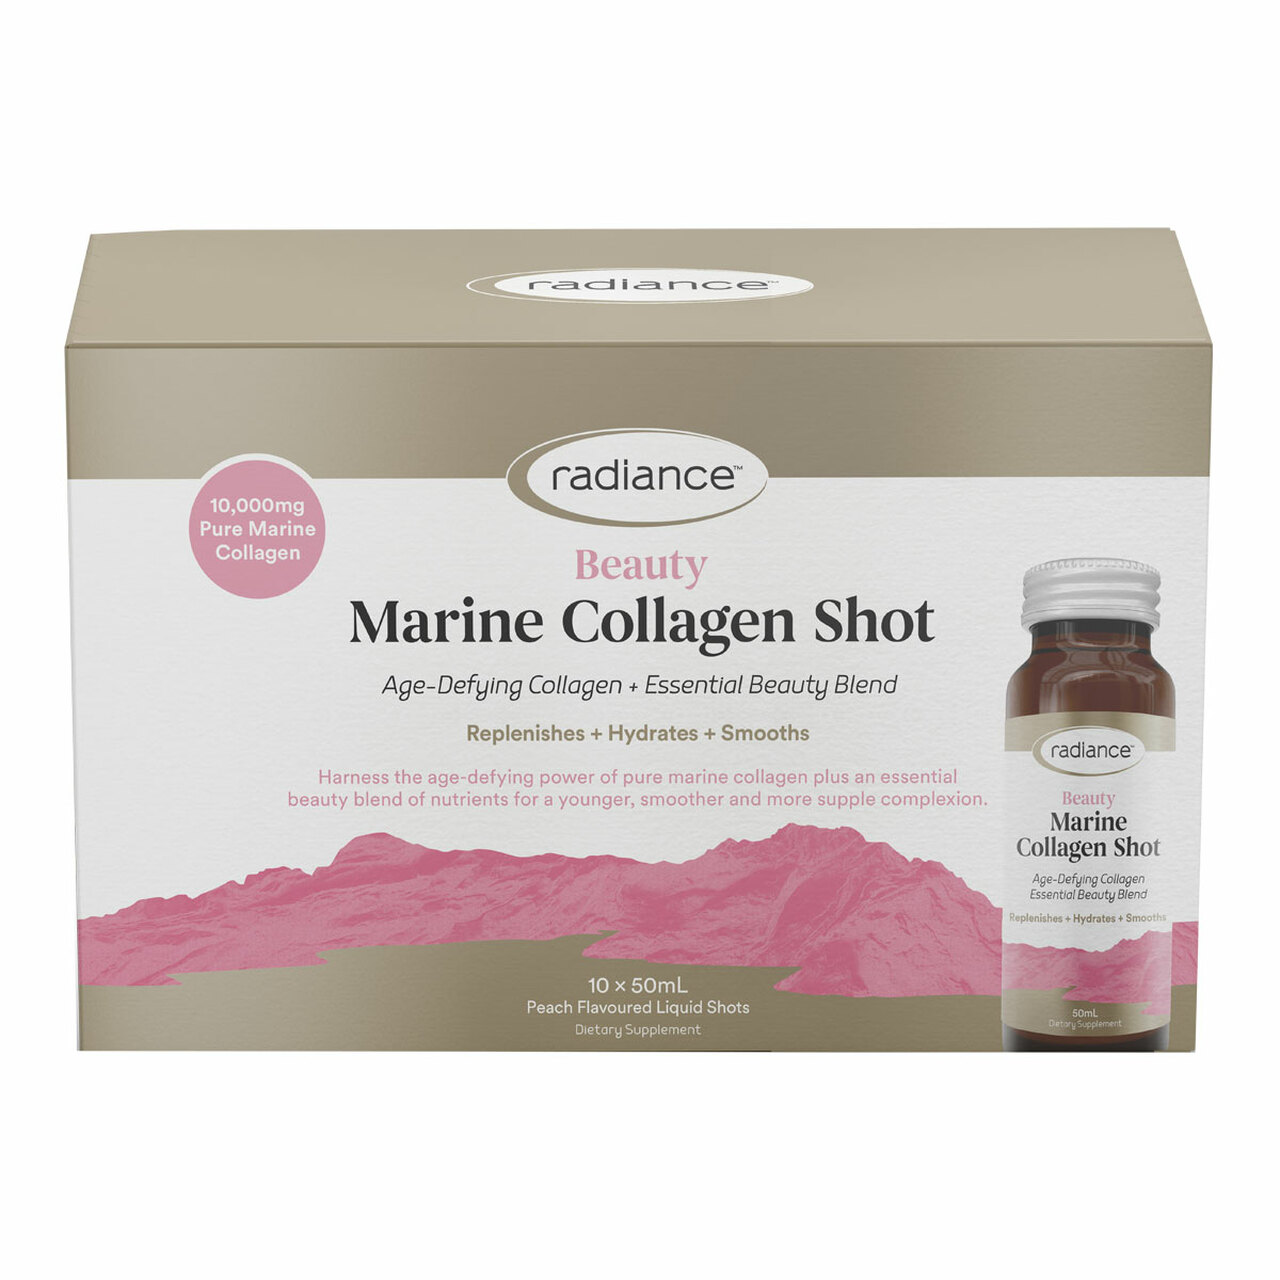 Radiance 海洋胶原蛋白 Beauty Marine Collagen Shots 10x shots